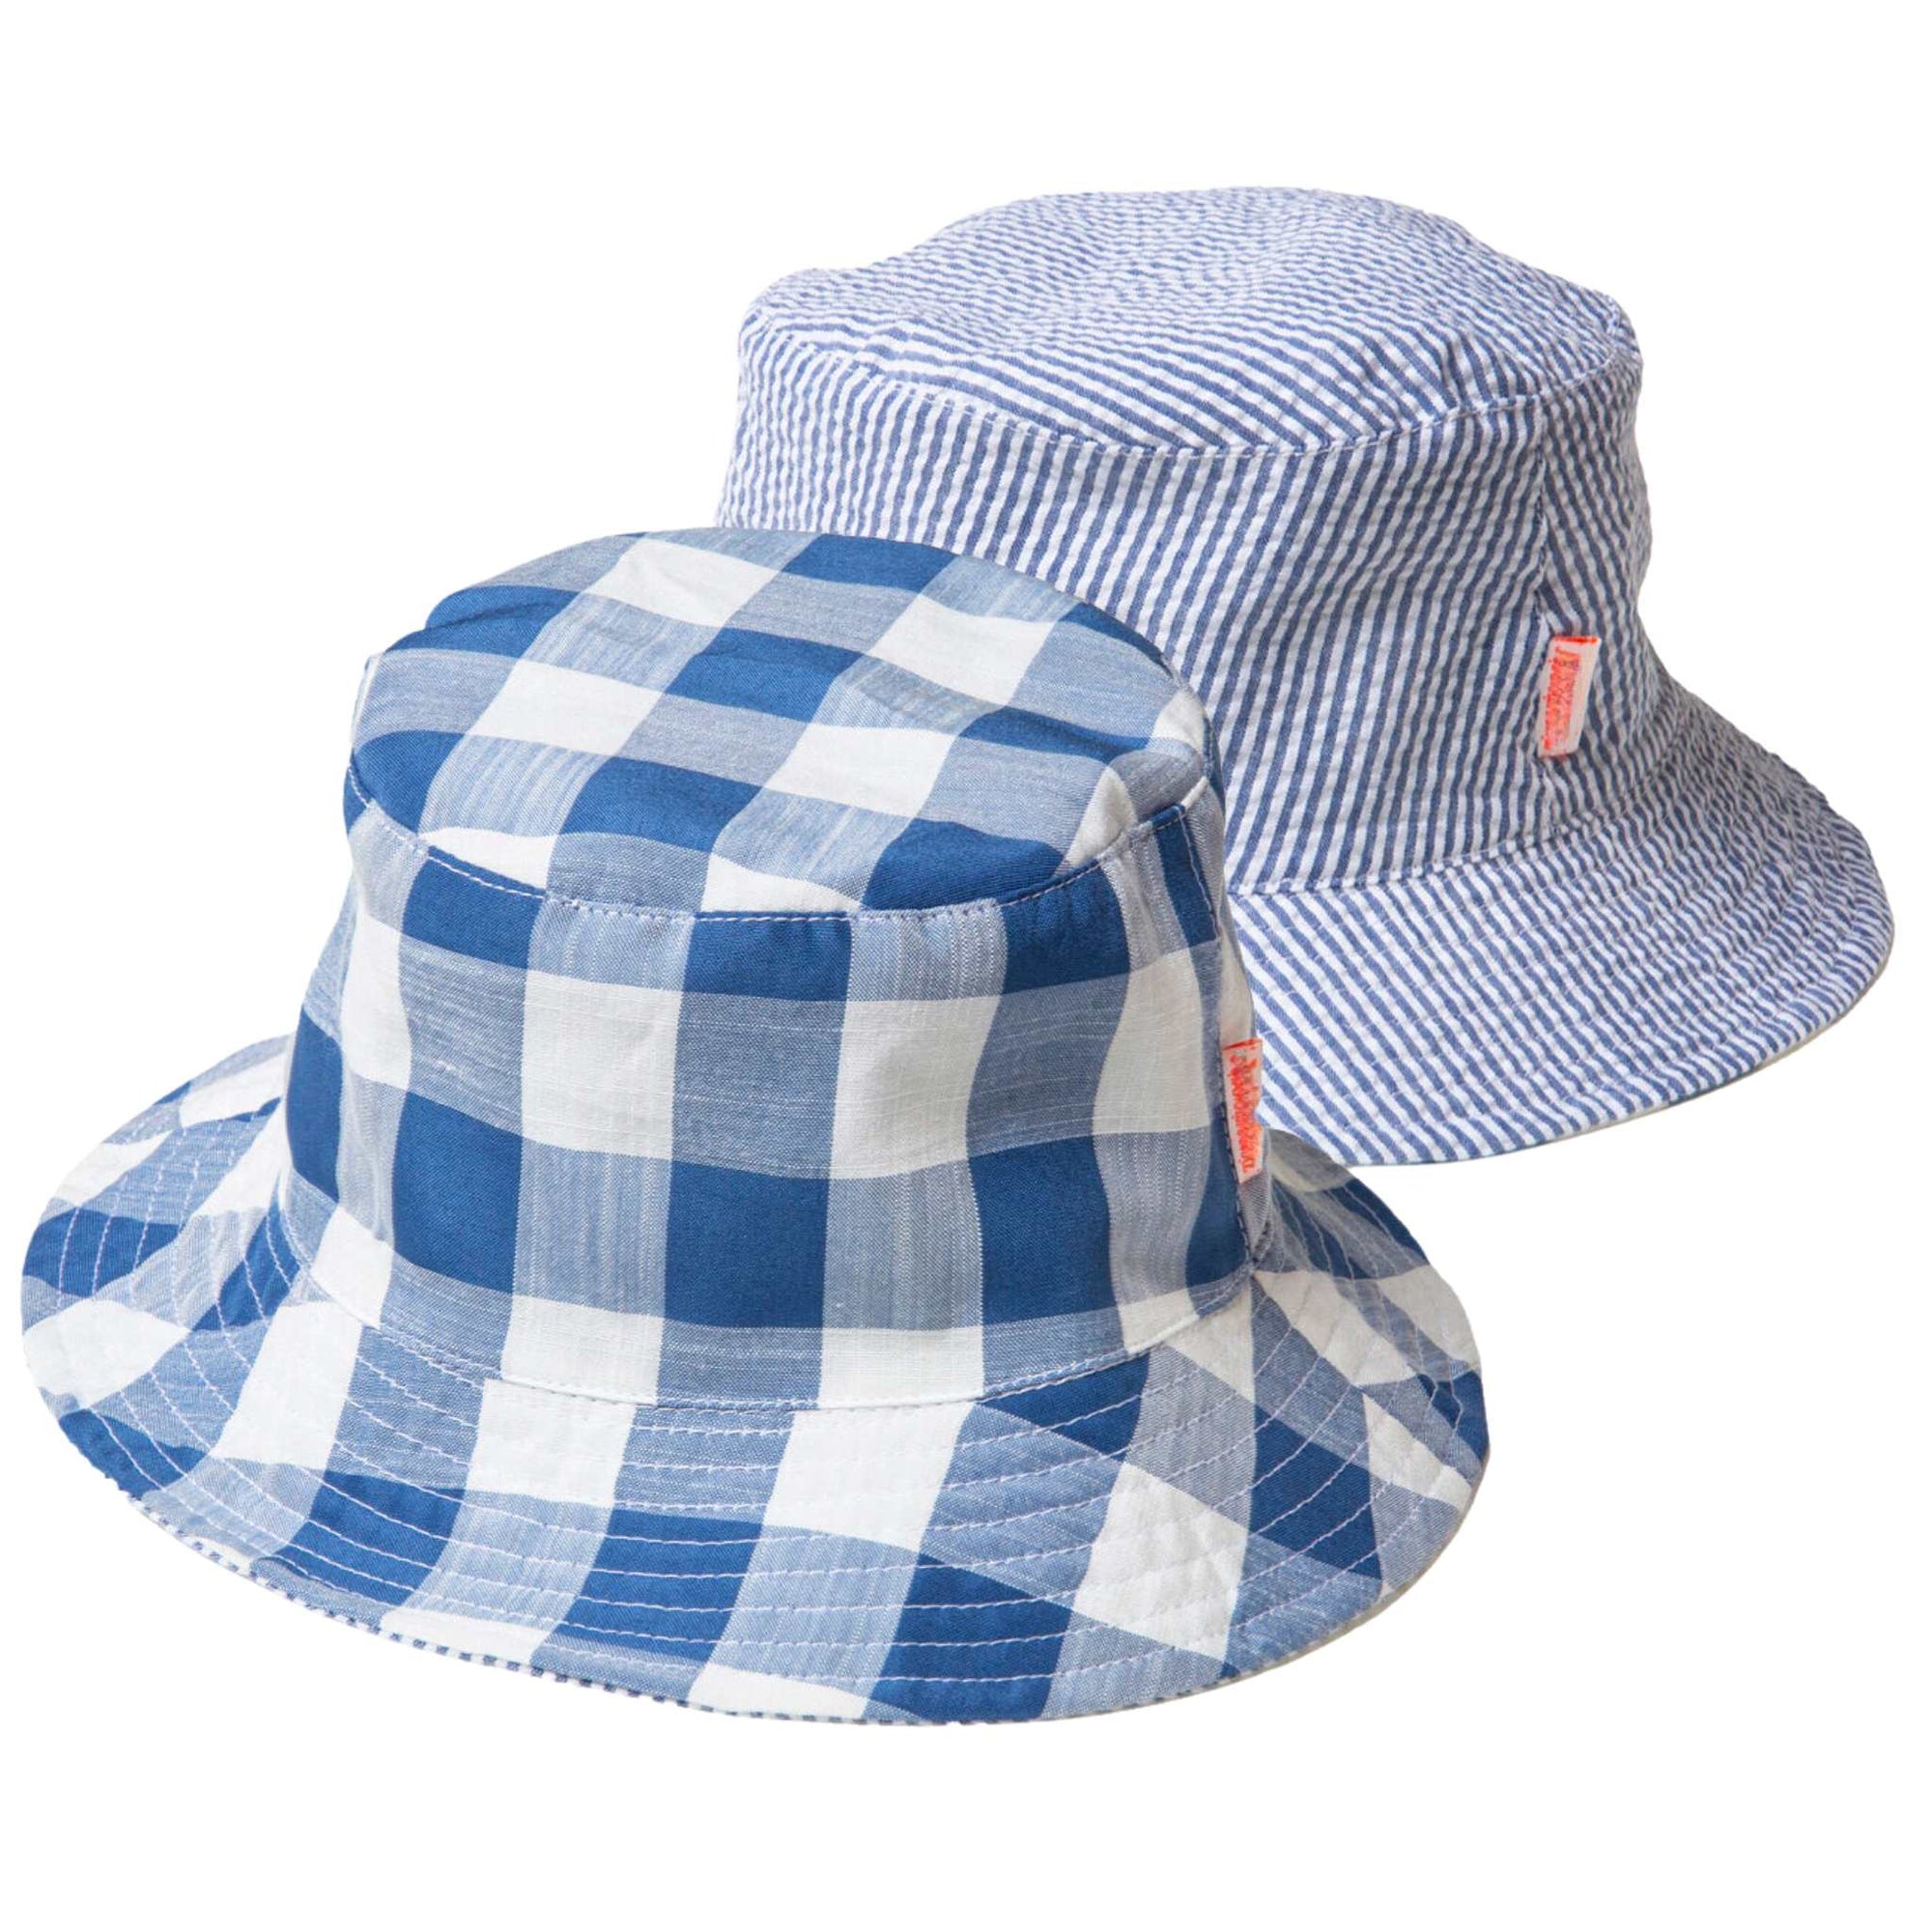 Reversible Retro Bucket Hat - Blue Check